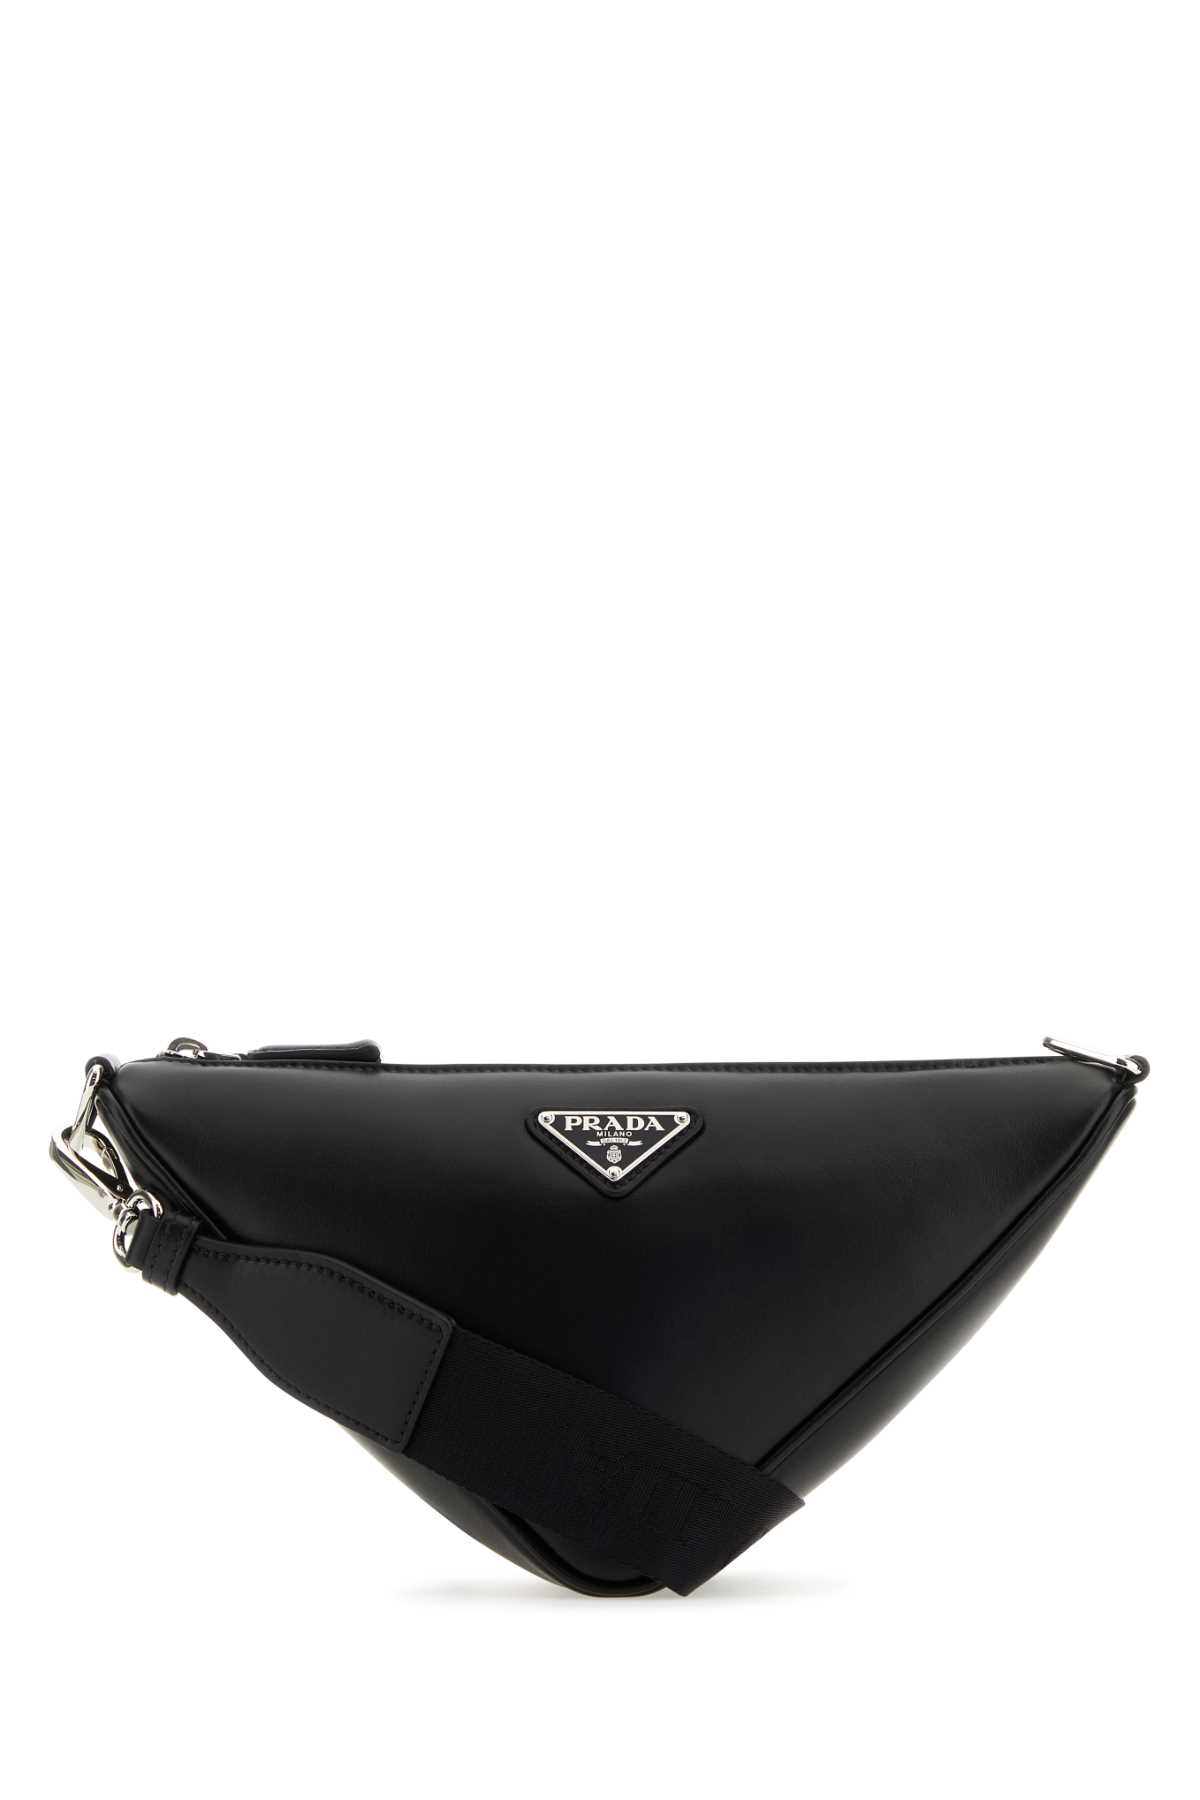 Prada Black Leather Triangle Crossbody Bag